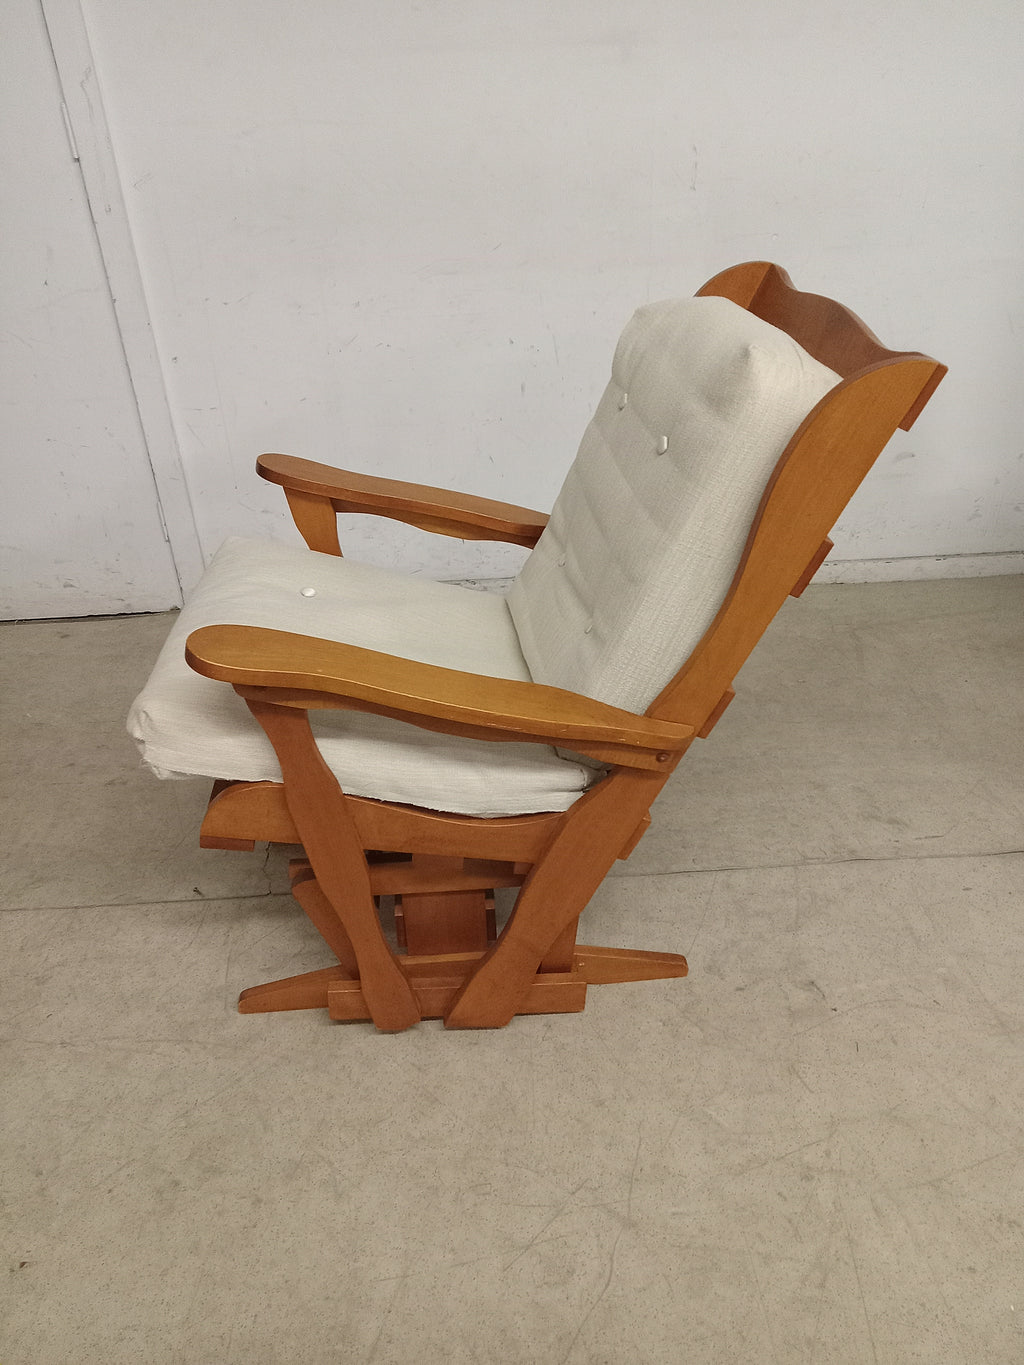 25"W Solid Wood Glider Rocker Chair